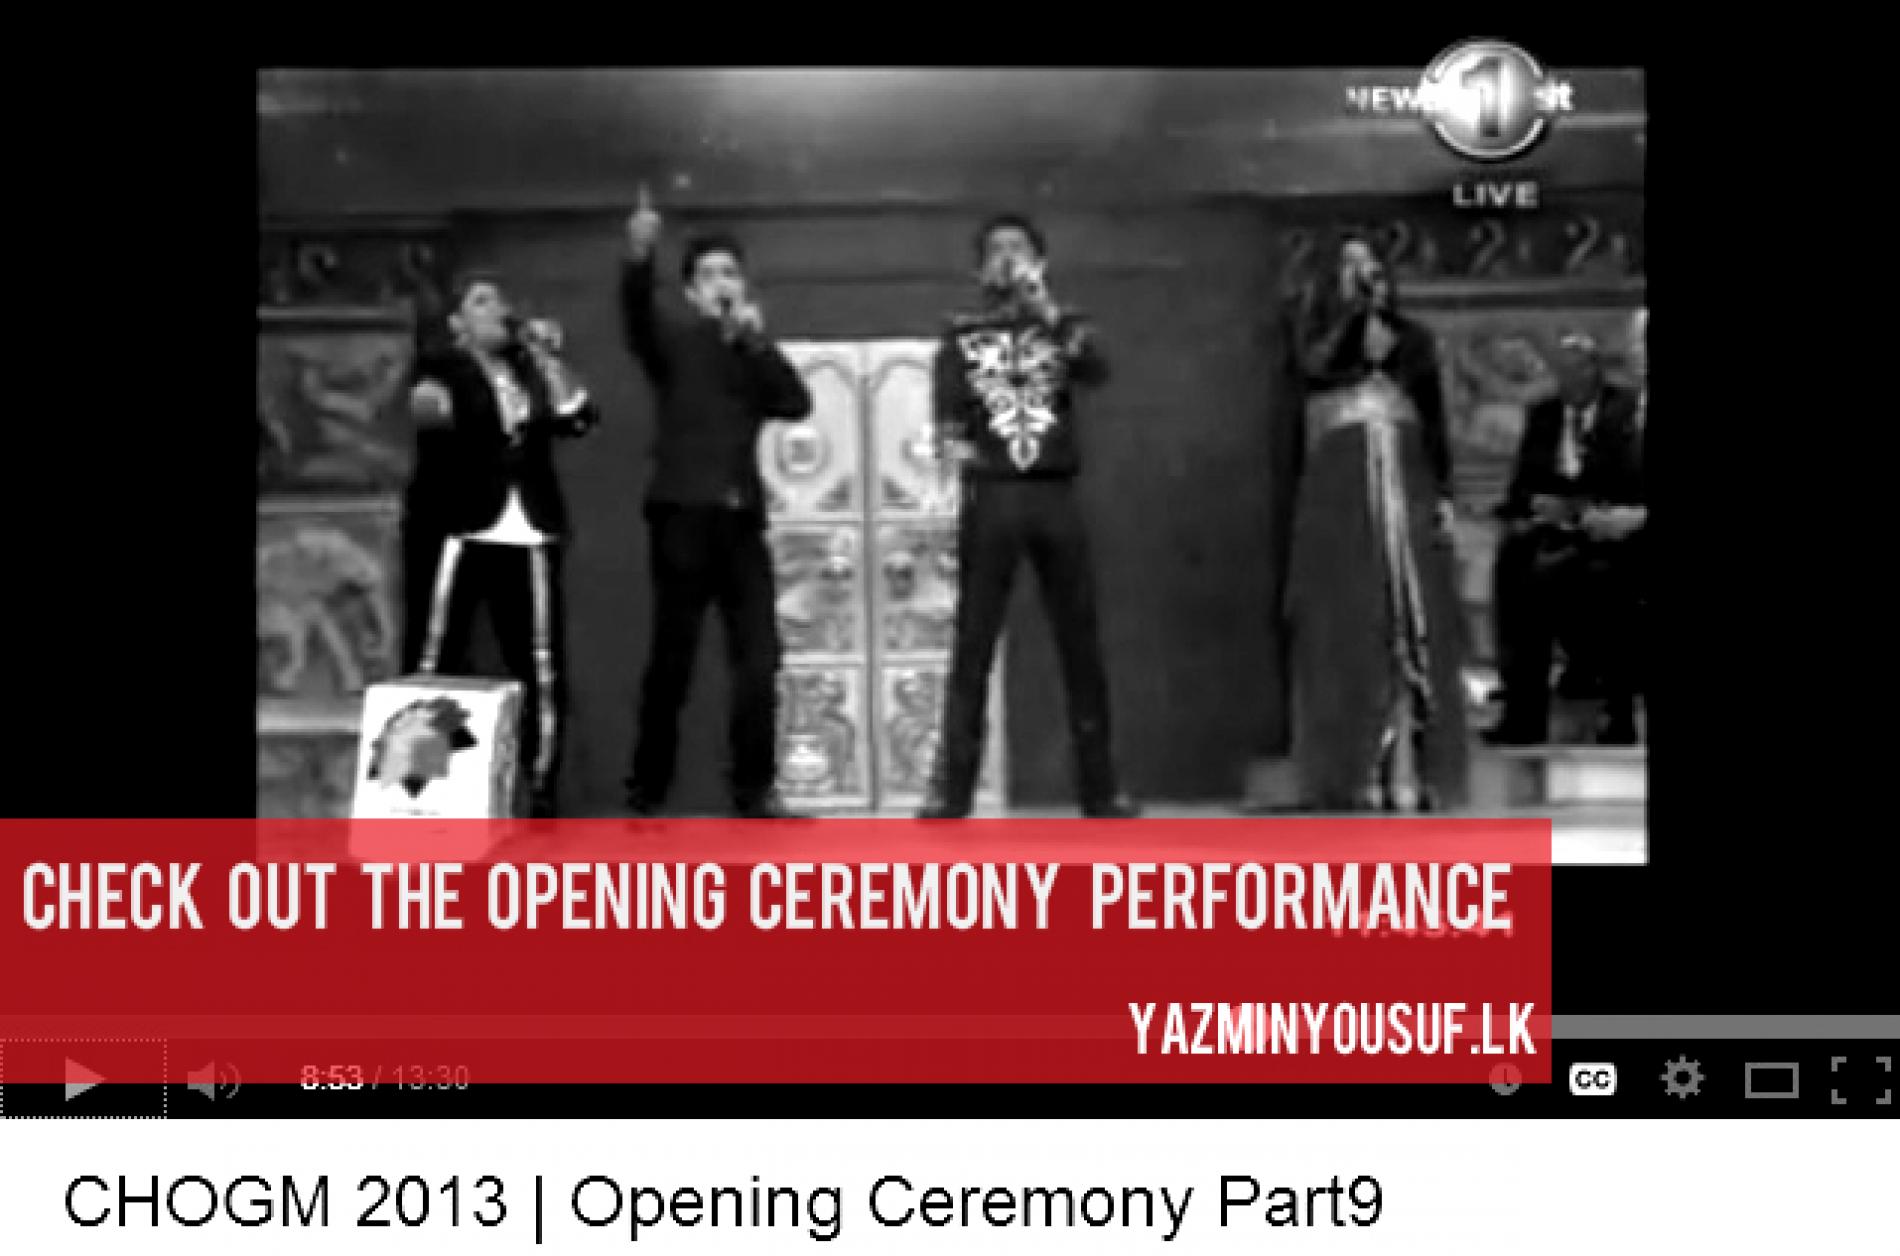 CHOGM 2013: Opening Ceremony Performance